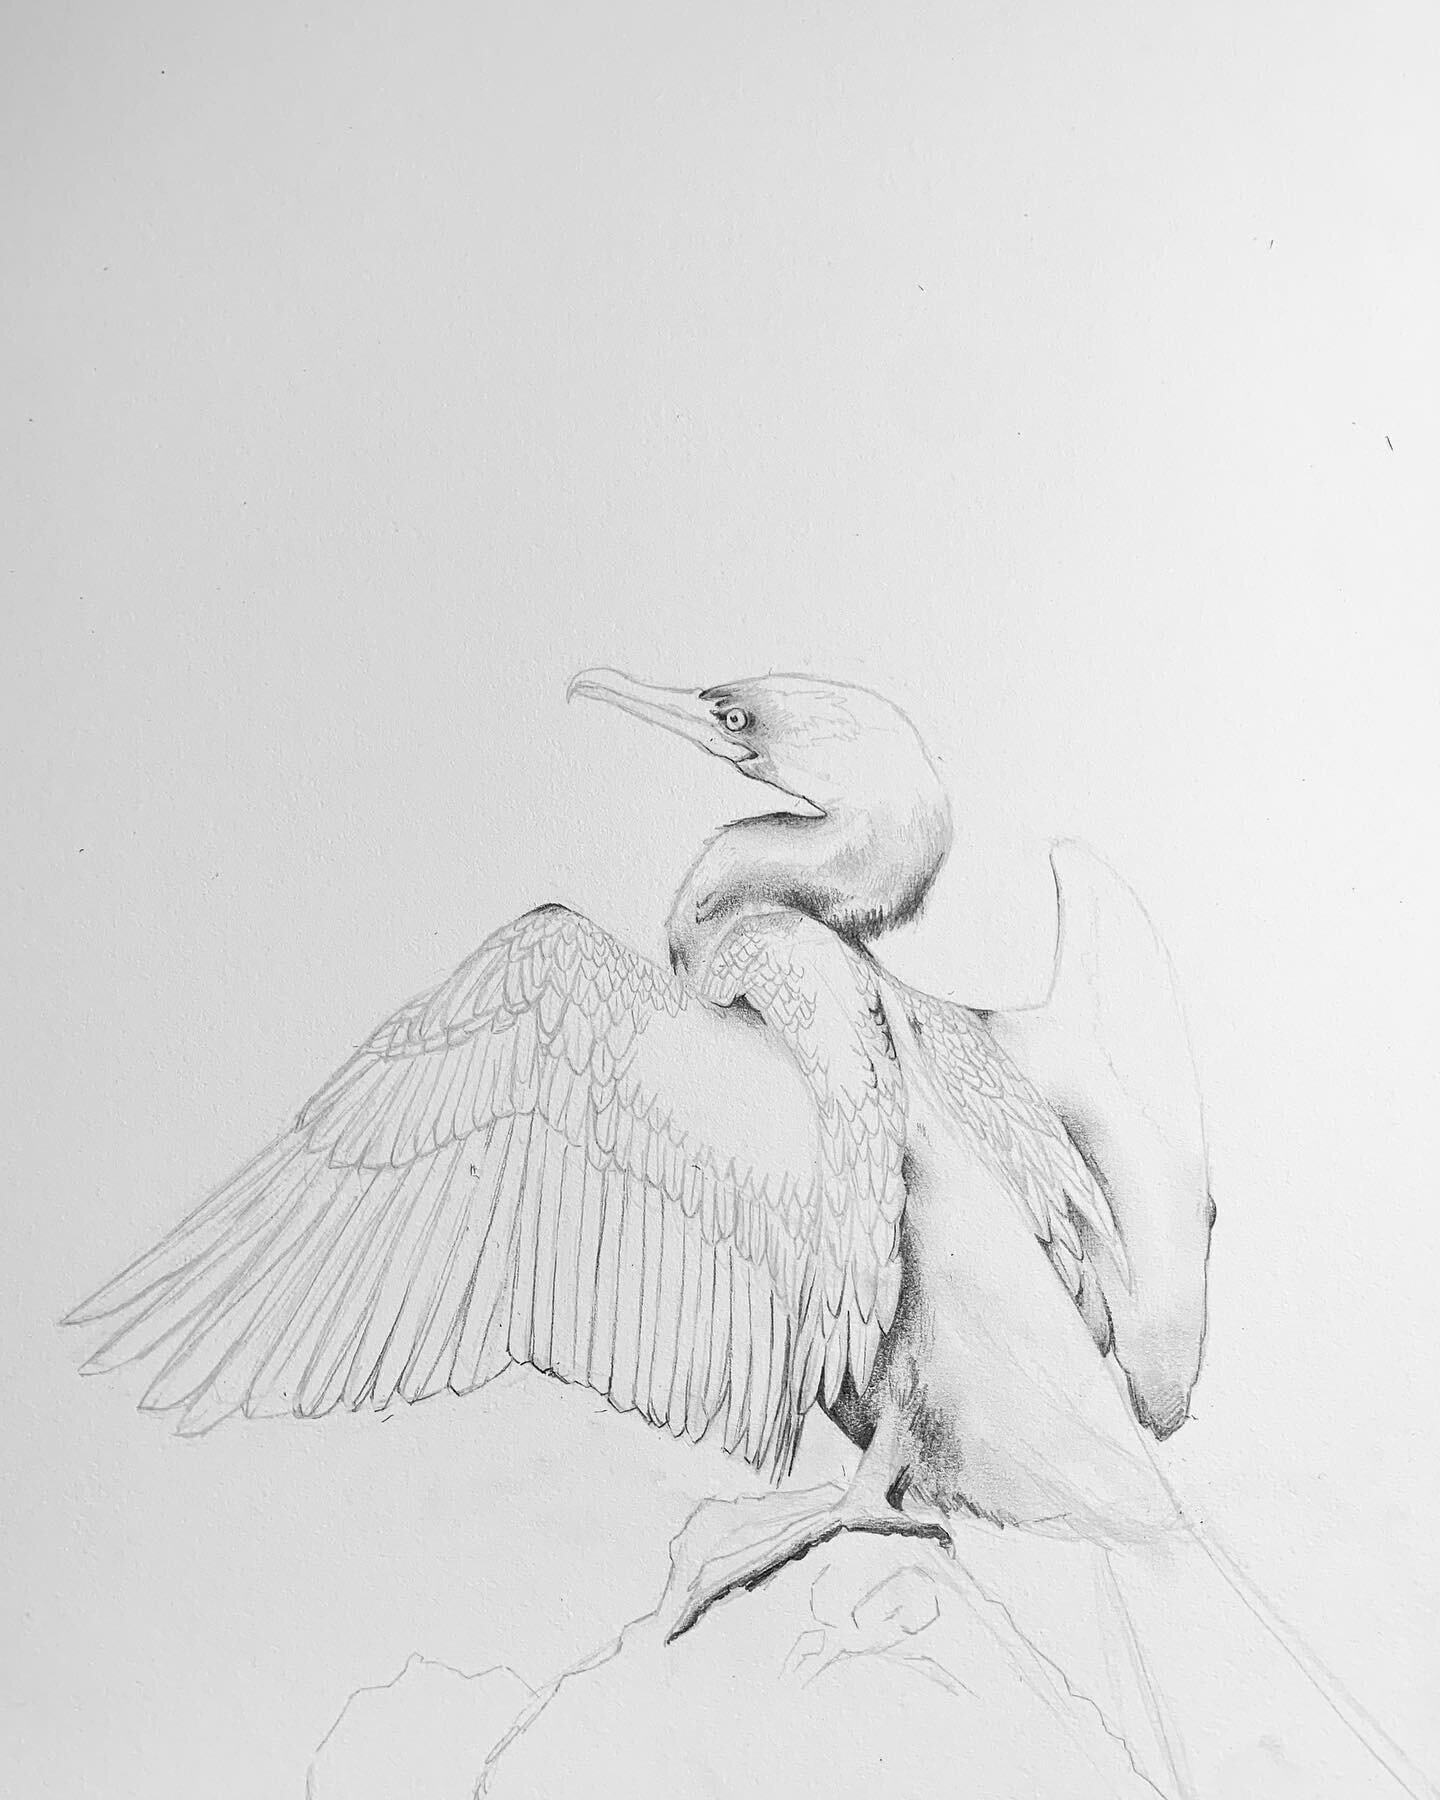 Great cormorant . Aalscholver
𝘗𝘩𝘢𝘭𝘢𝘤𝘳𝘰𝘤𝘰𝘳𝘢𝘹 𝘤𝘢𝘳𝘣𝘰
.
.
.
 #artist #art #dutchartist #greatcormorant #aalscholver #artistoninstagram #creative #artwork #design #drawing #sketch #nature #naturelover #wildlife #botanicalart #watercolor 